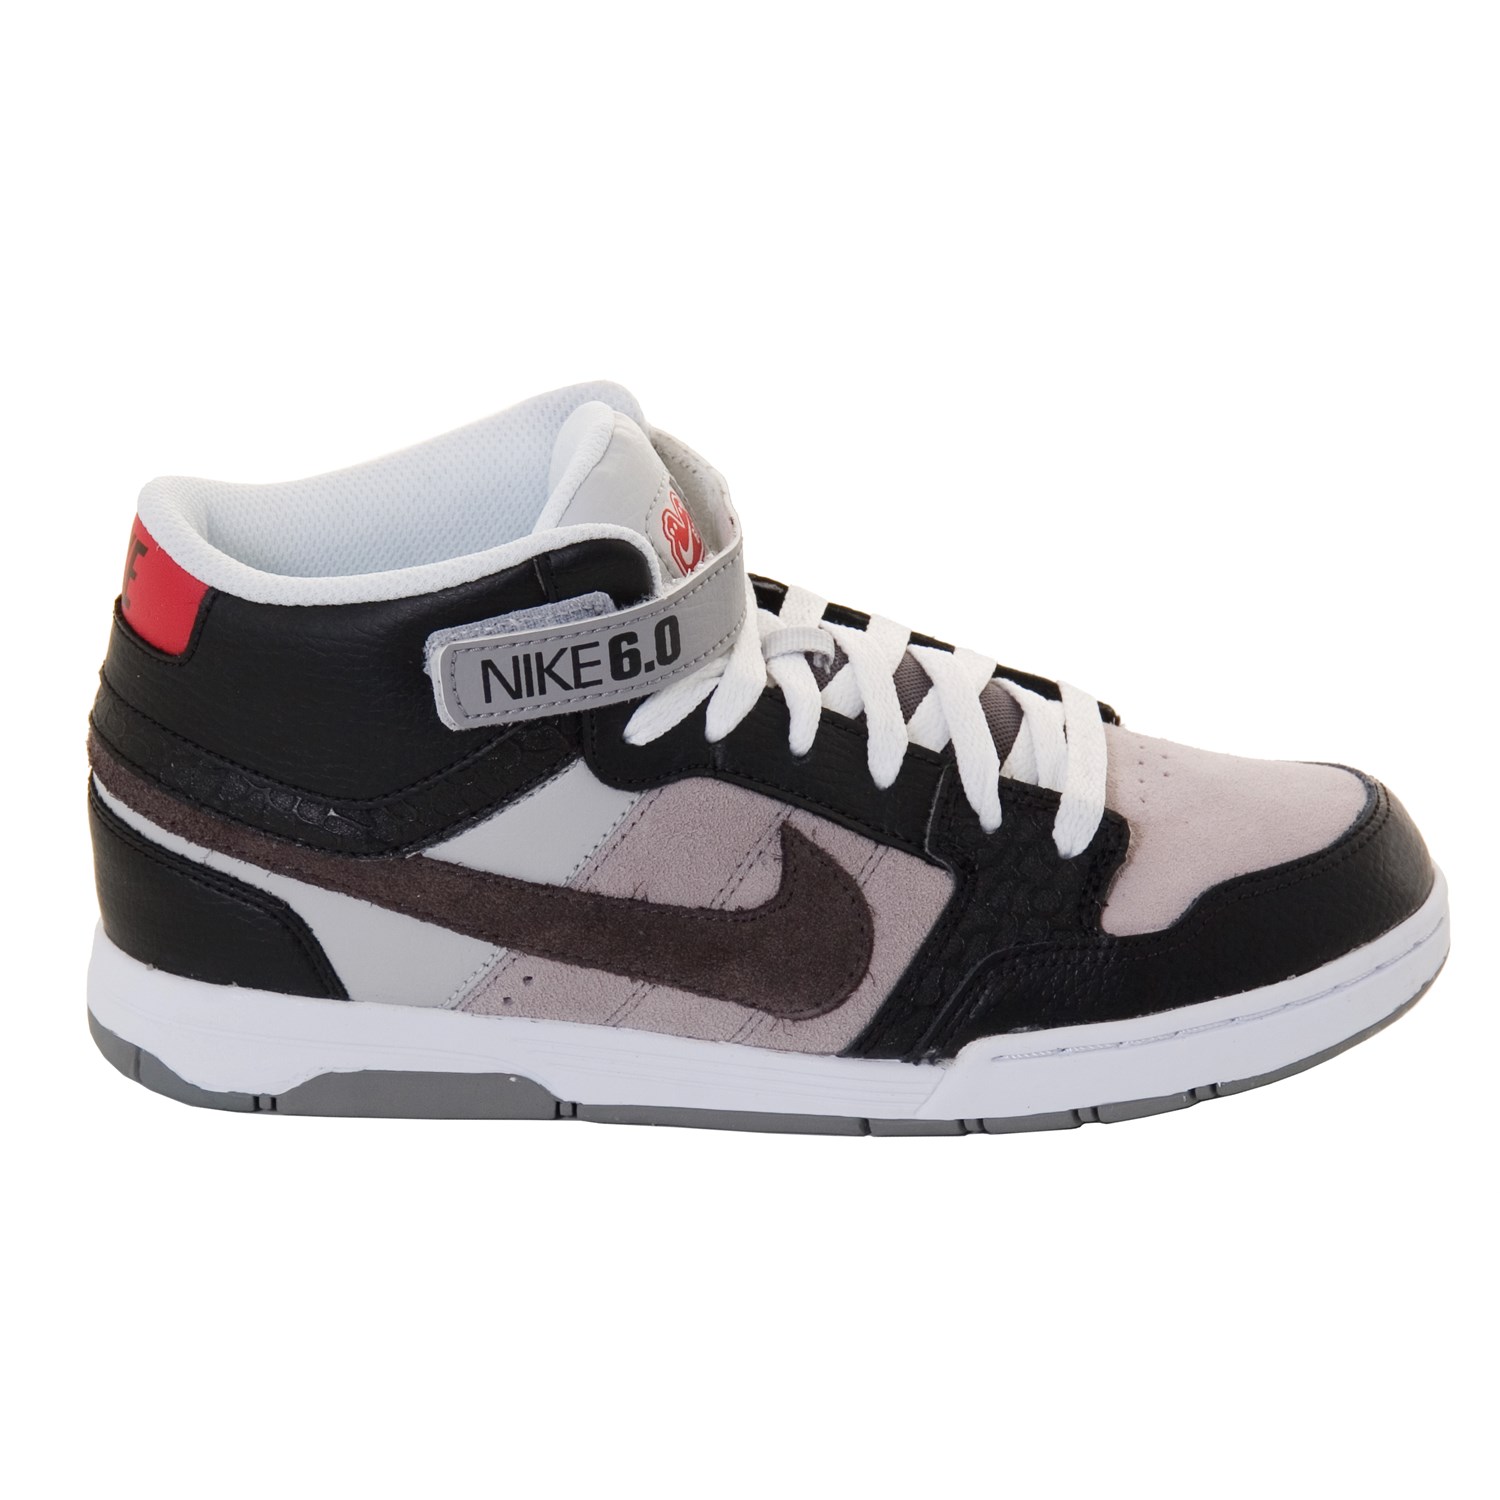 Nike 6.0 Mogan Mid Jr Shoes - |